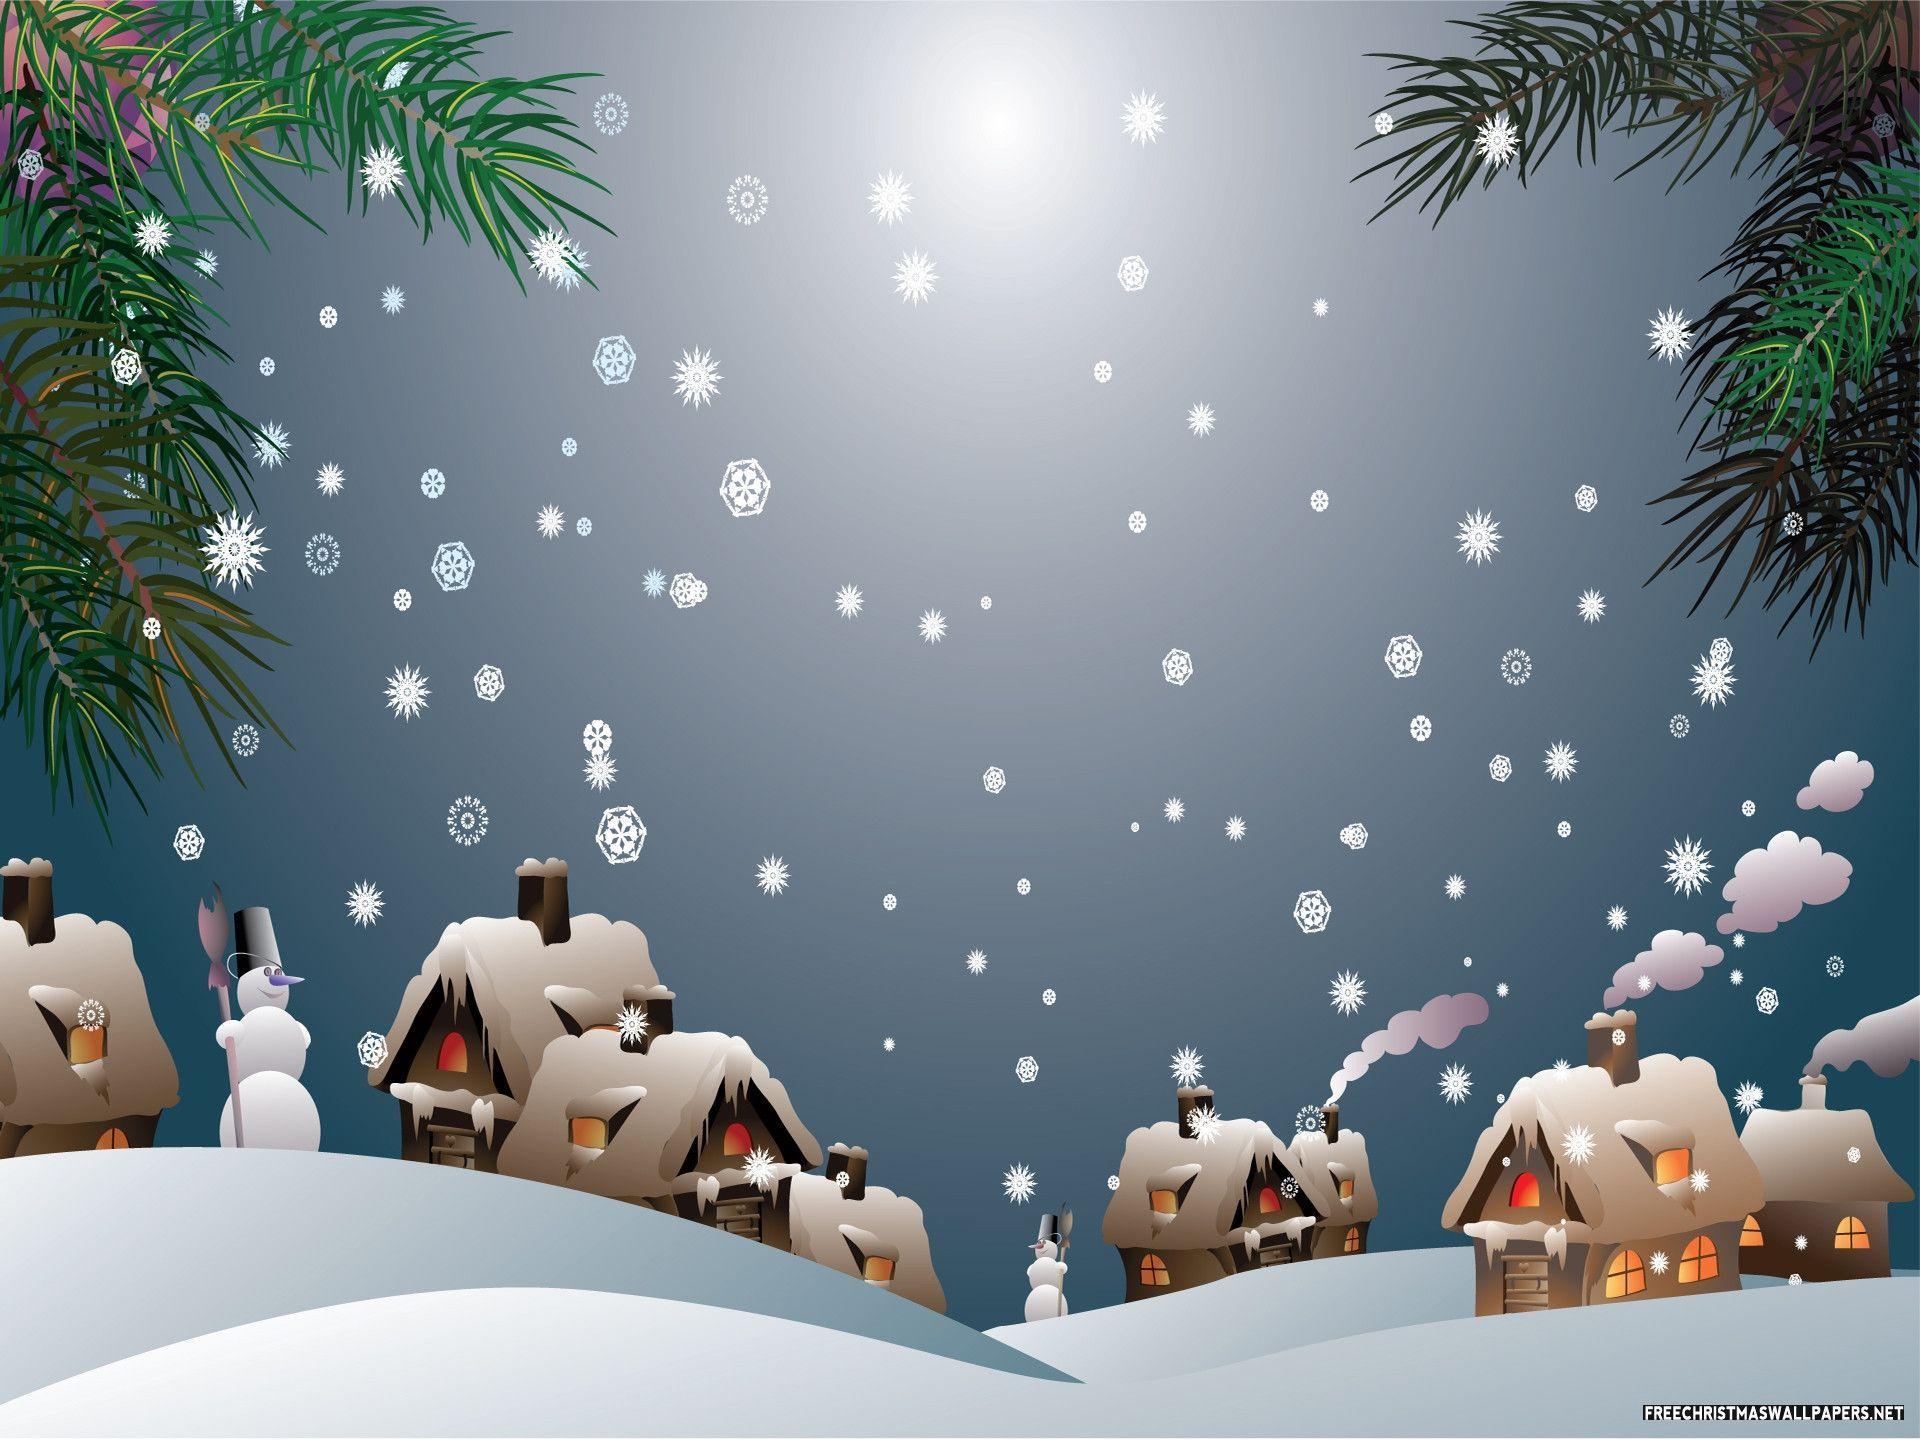 Christmas Village Background 26790 Wallpaper: 1920x1440